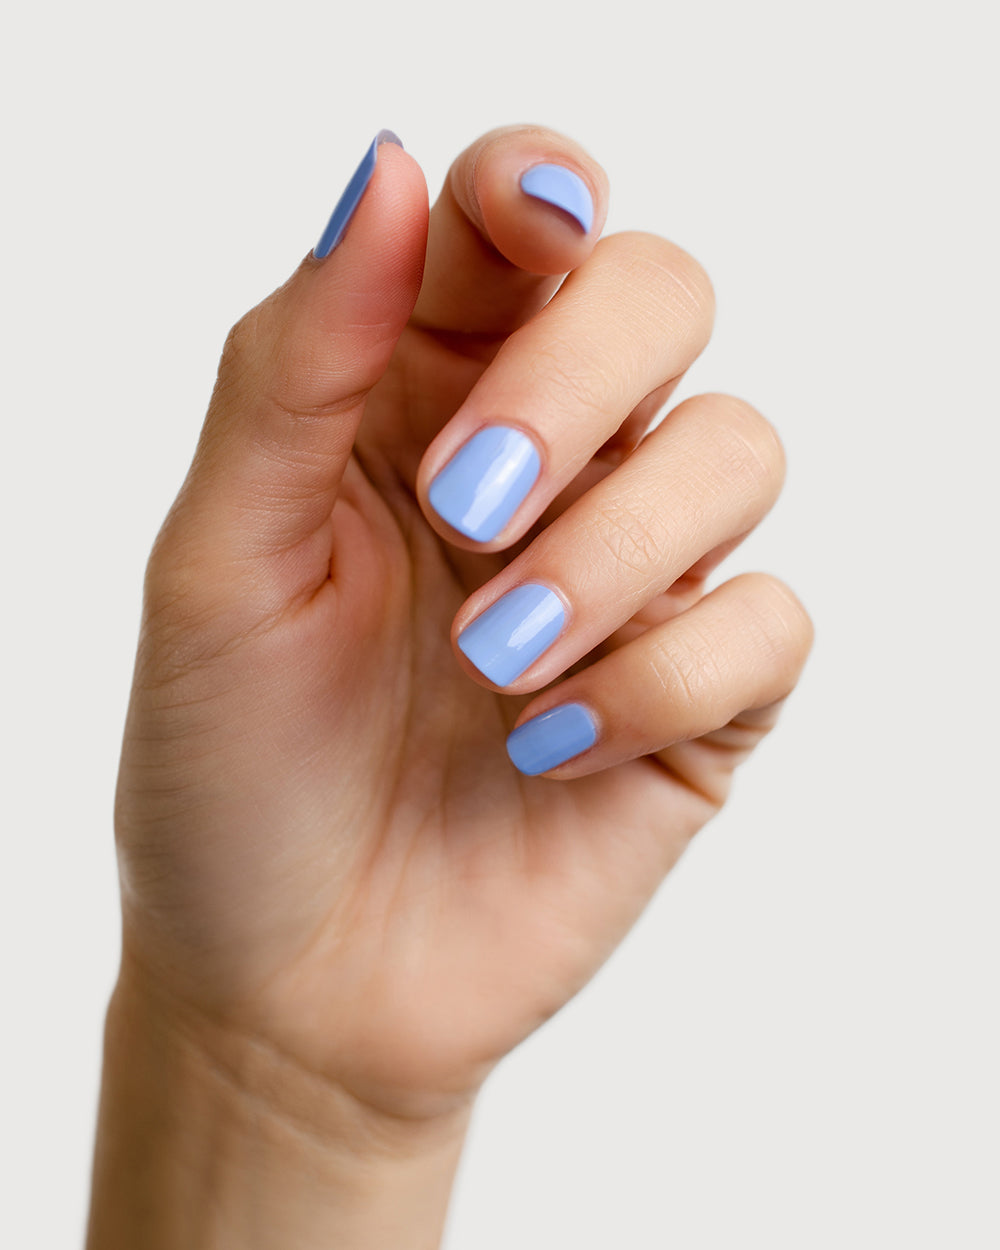 periwinkle blue nail polish hand swatch on fair skin tone